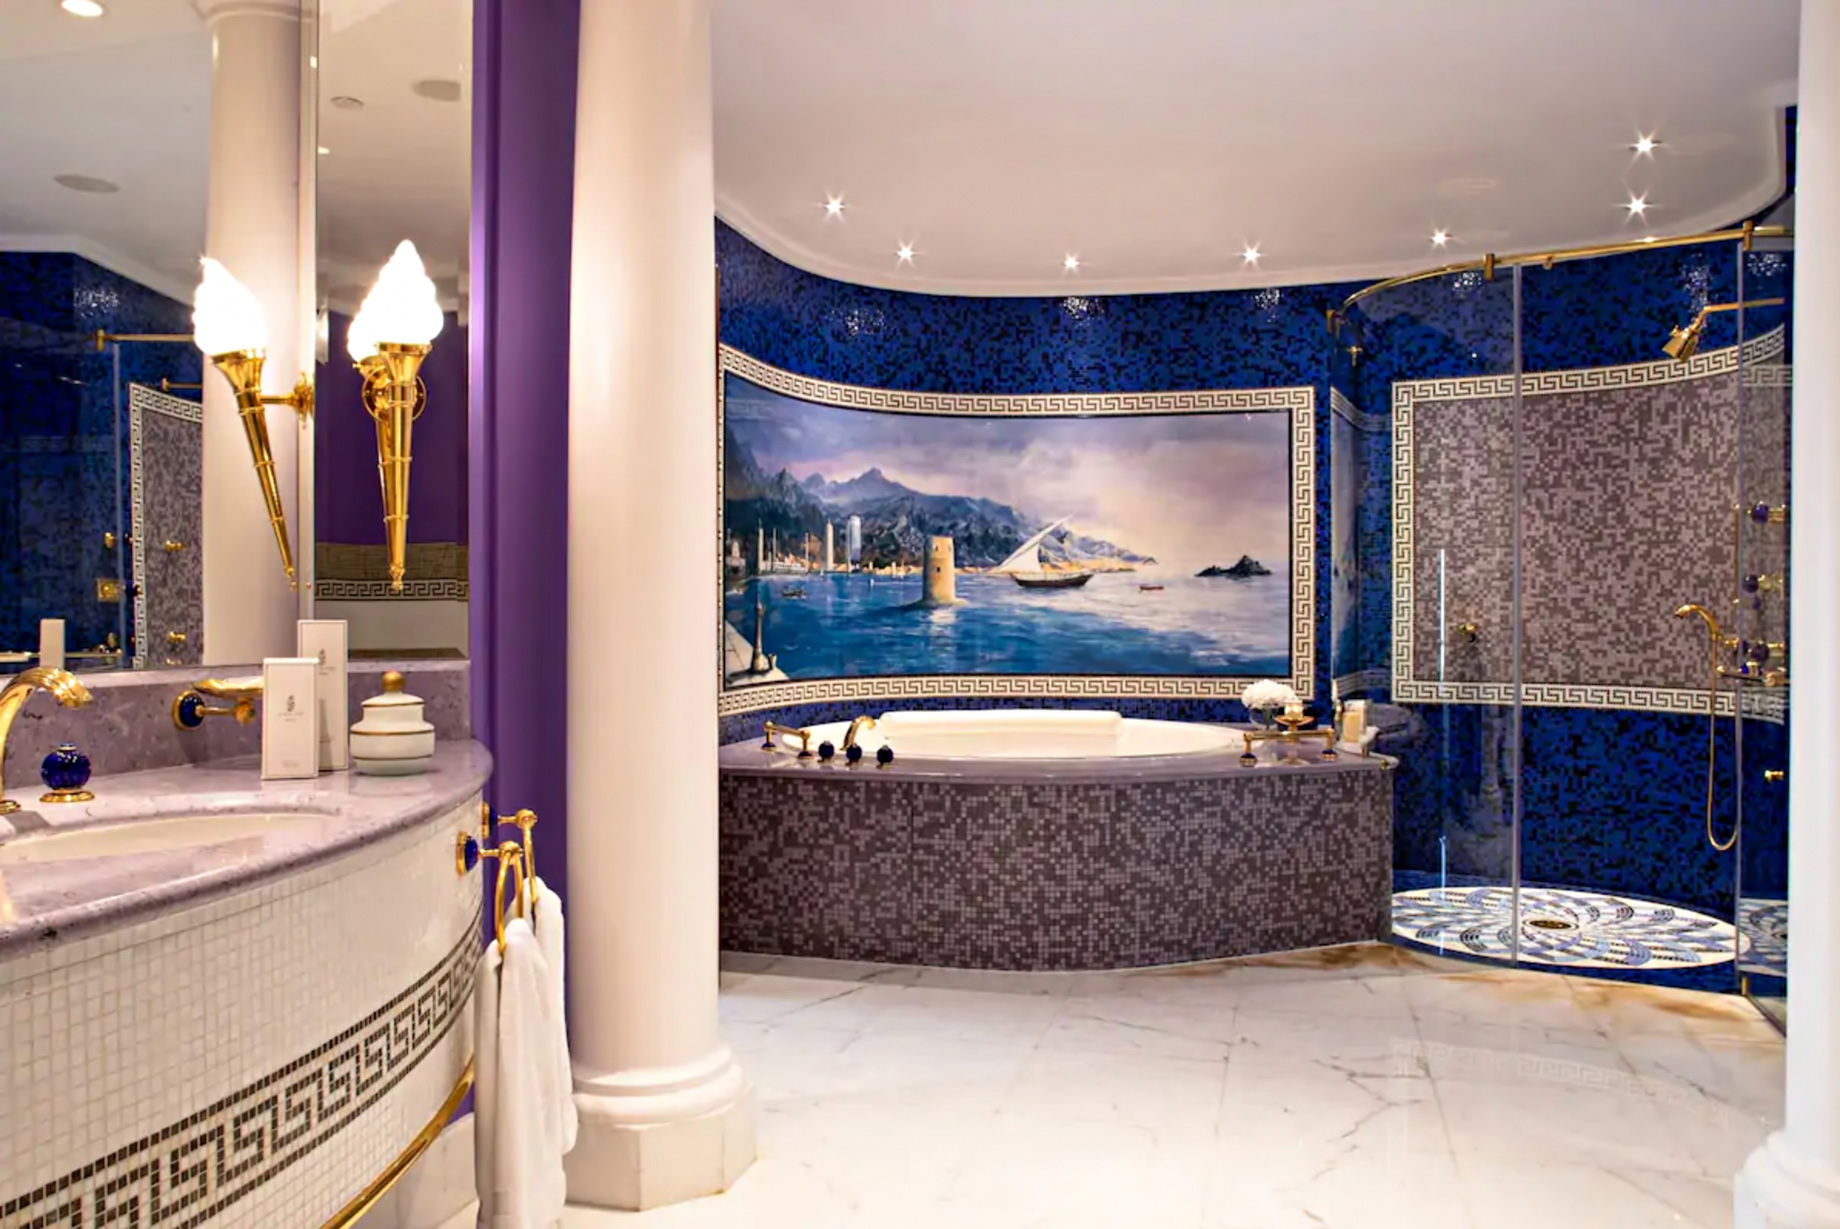 Burj Al Arab Jumeirah Hotel – Dubai, UAE – Diplomatic Suite Bathroom